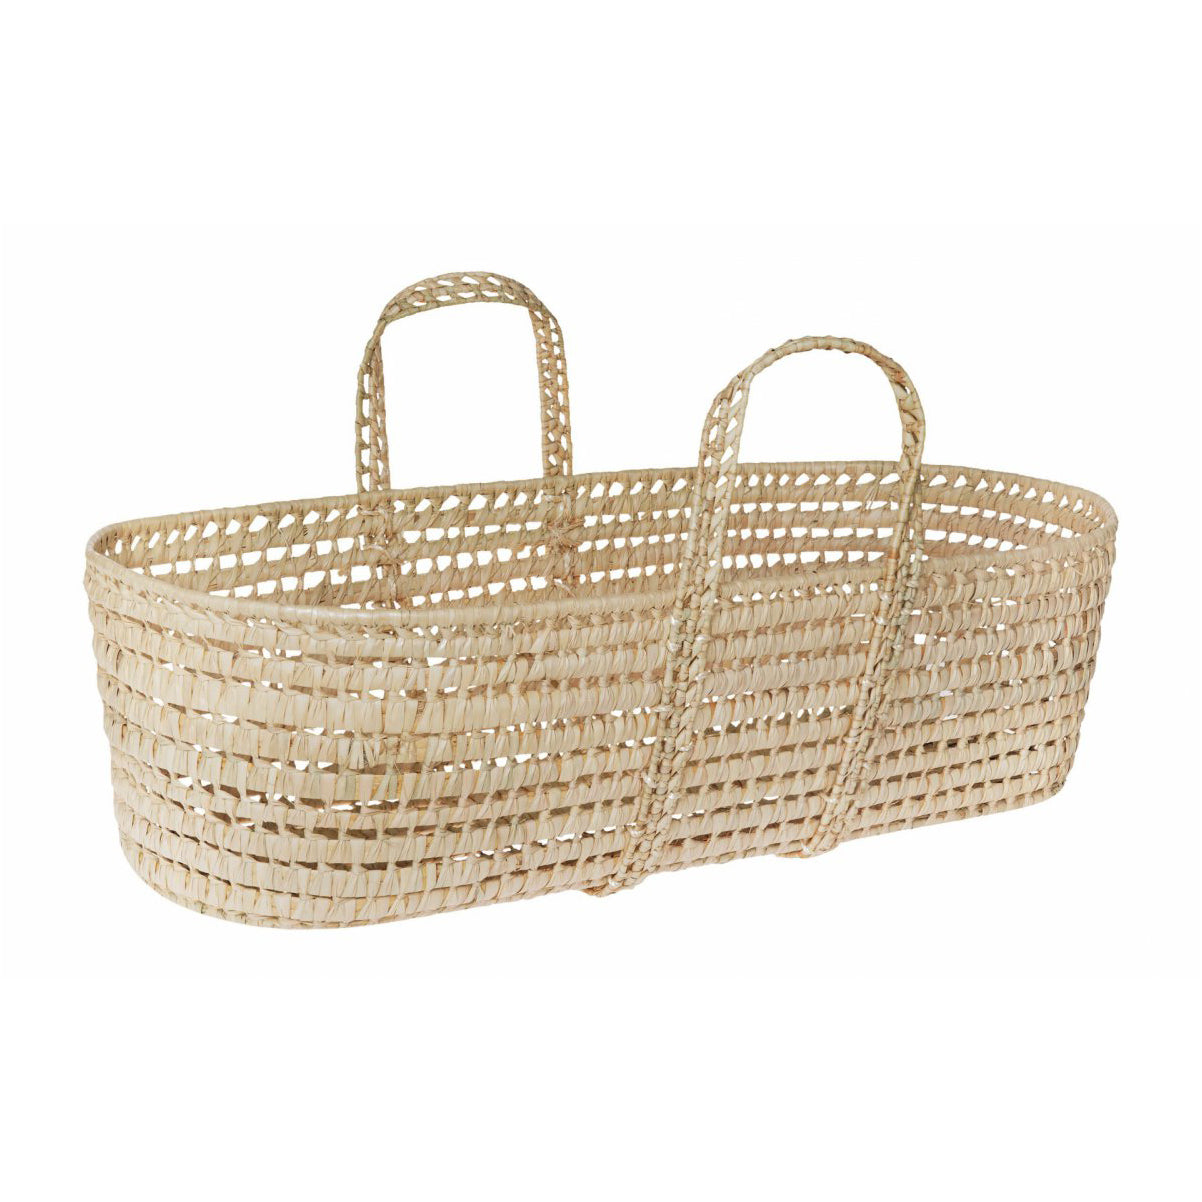 Minky Dot Bedding Set for Moses Basket - does not include basket - Custom Made